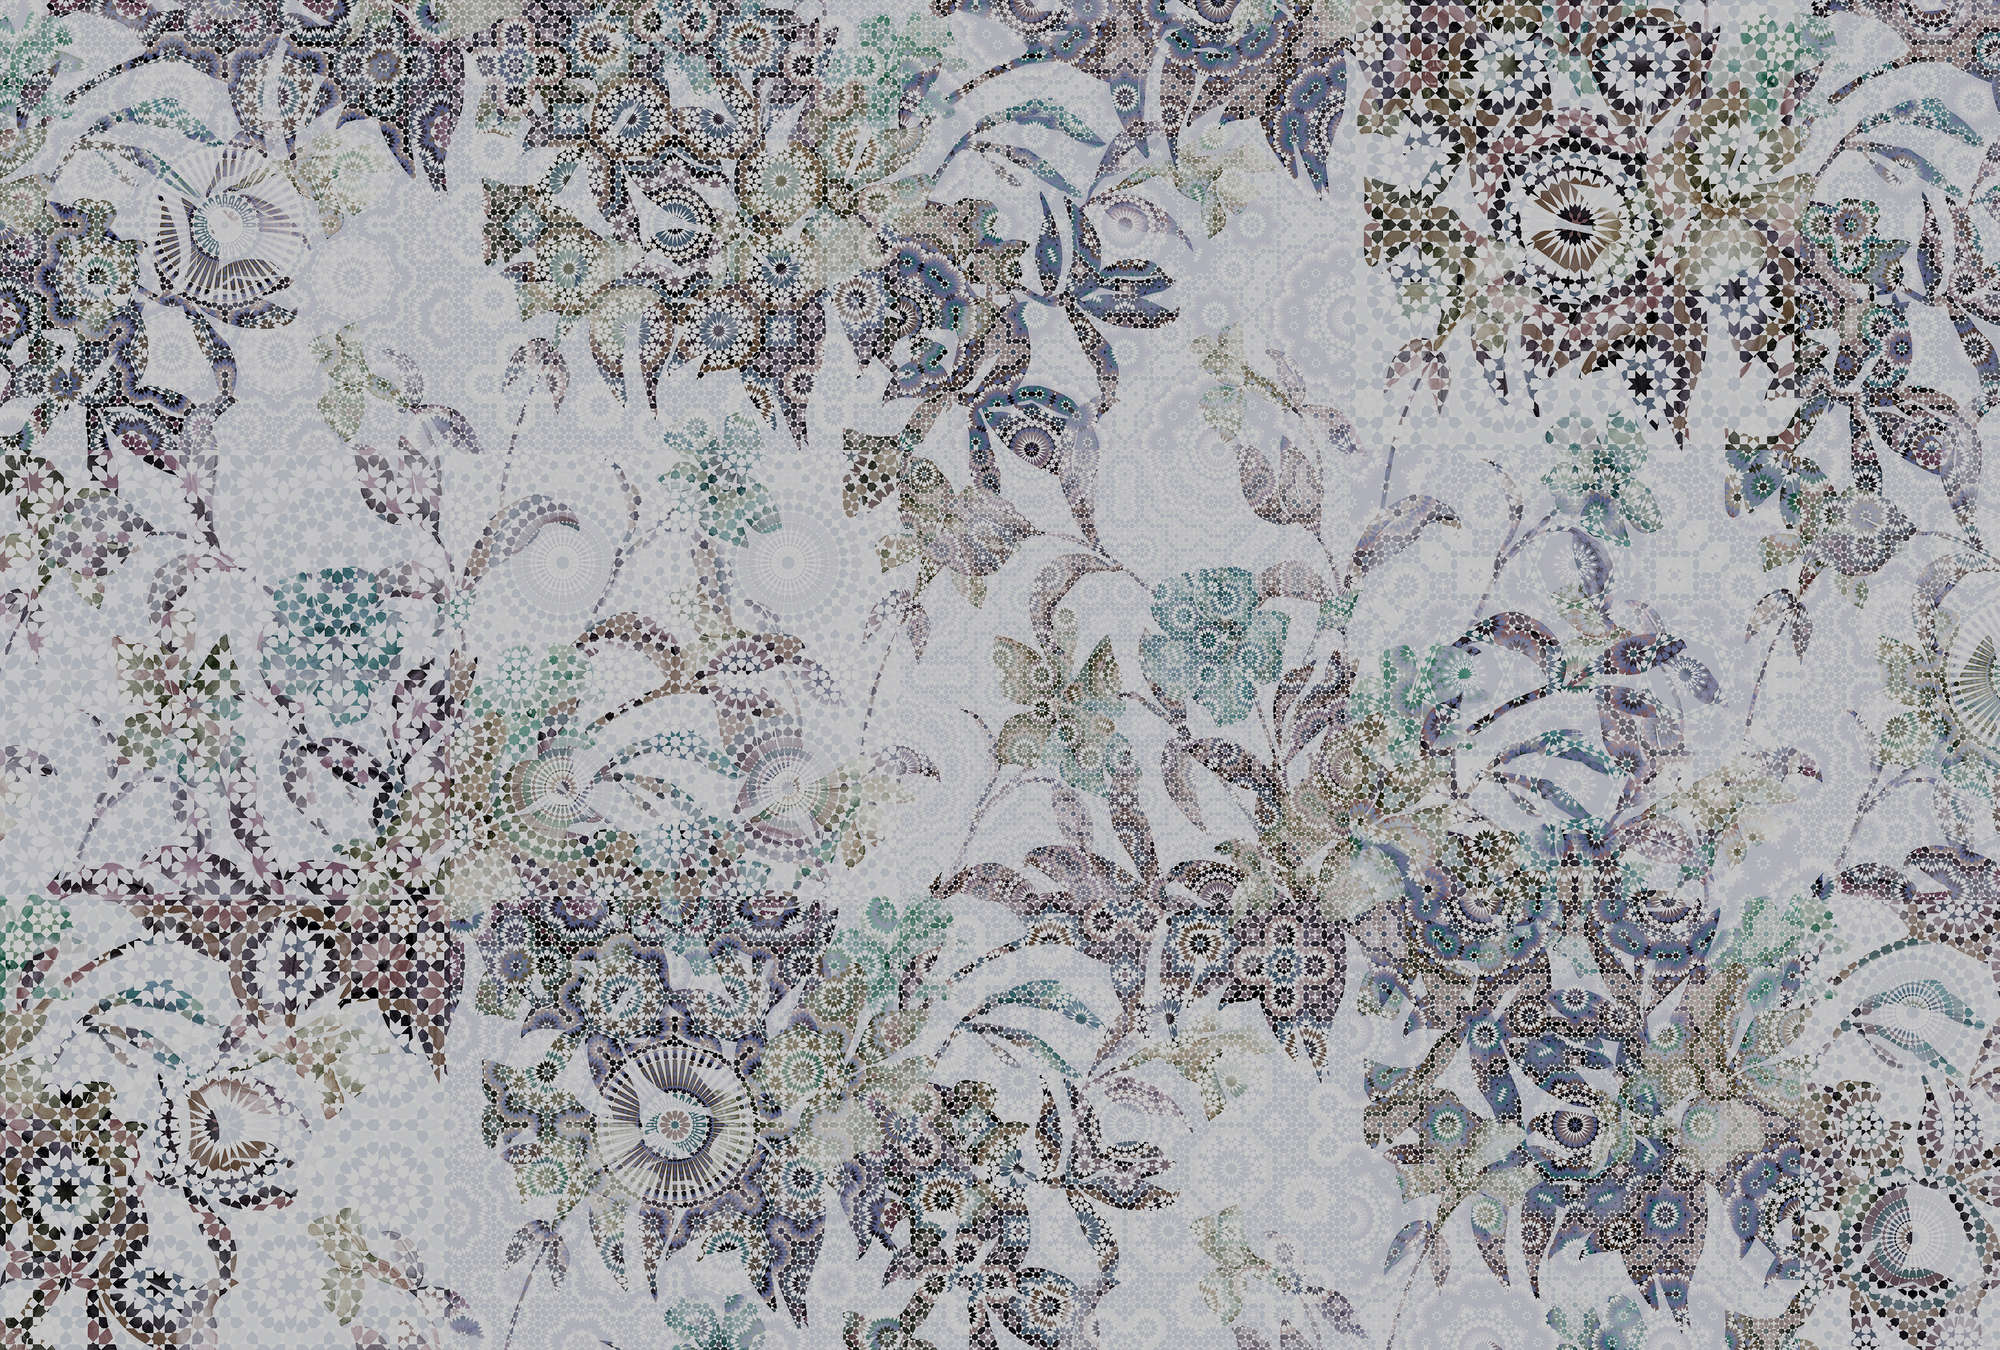             Mosaik Fototapete mit floralem Blättermuster in Grau
        